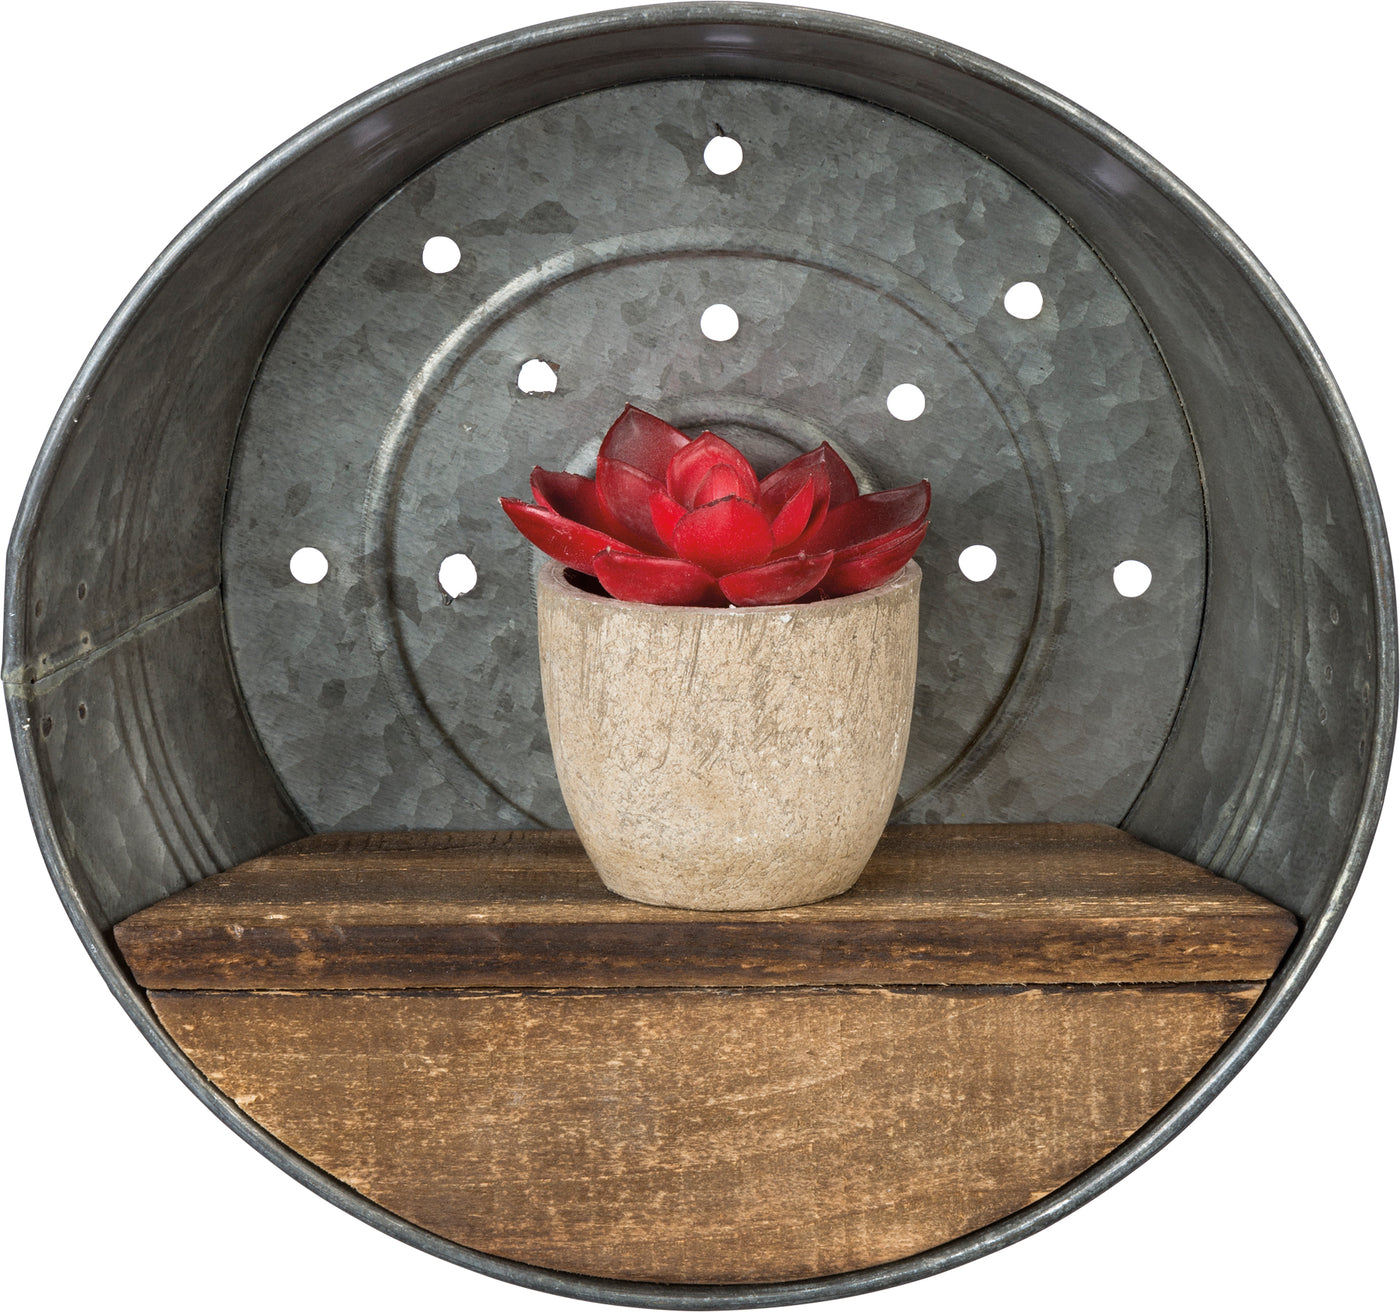 Round Galvanized Pan with Wooden Shelf